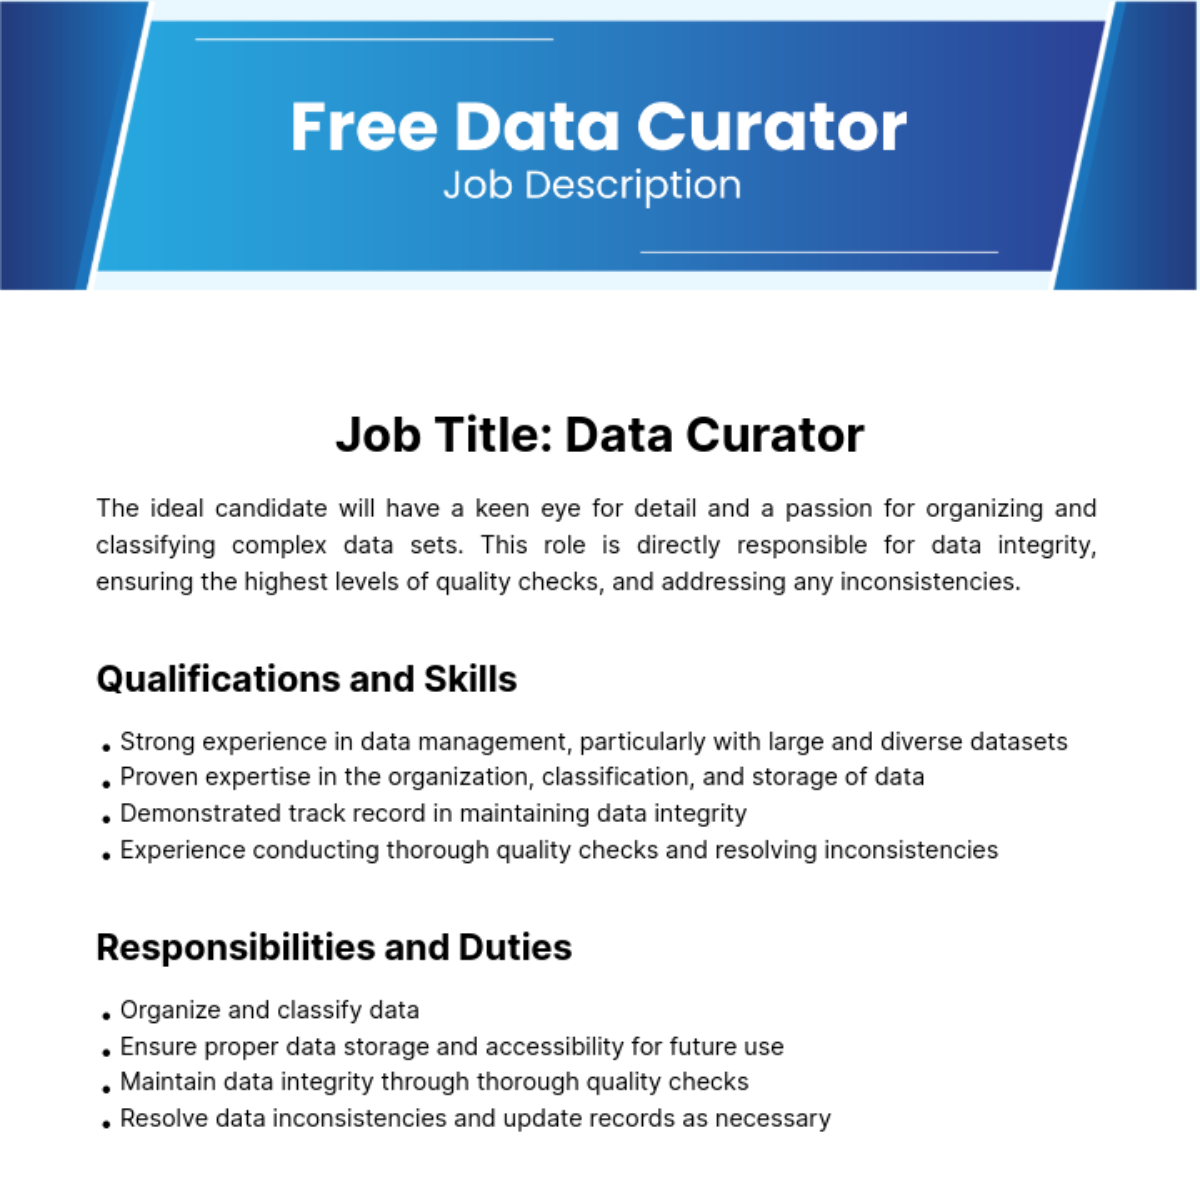 Data Curator Job Description Template